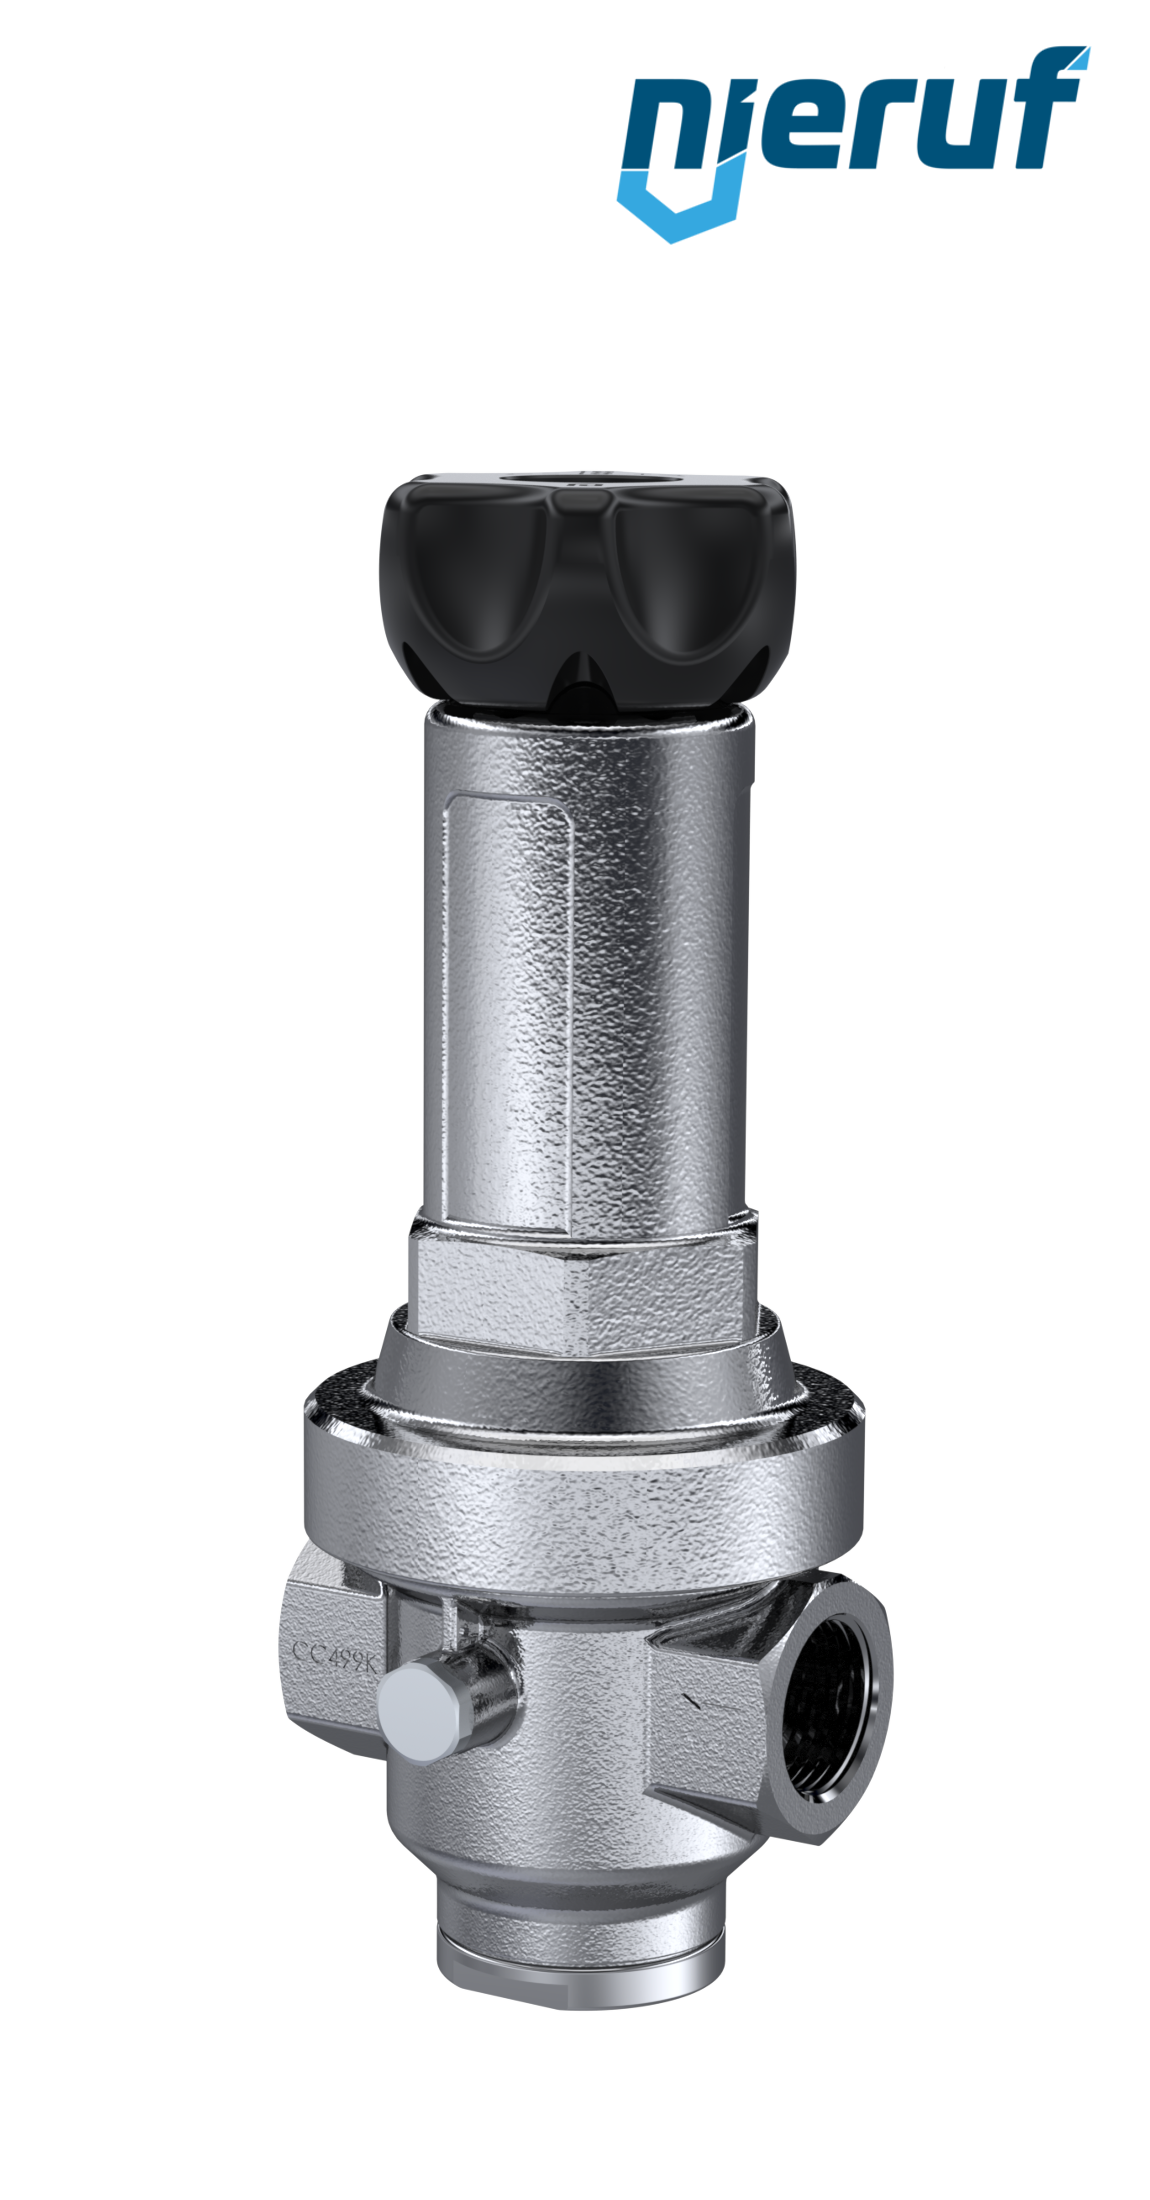 precision-pressure reducing valve 3/4" inch DM15 stainless steel FKM 10.0 - 50.0 bar